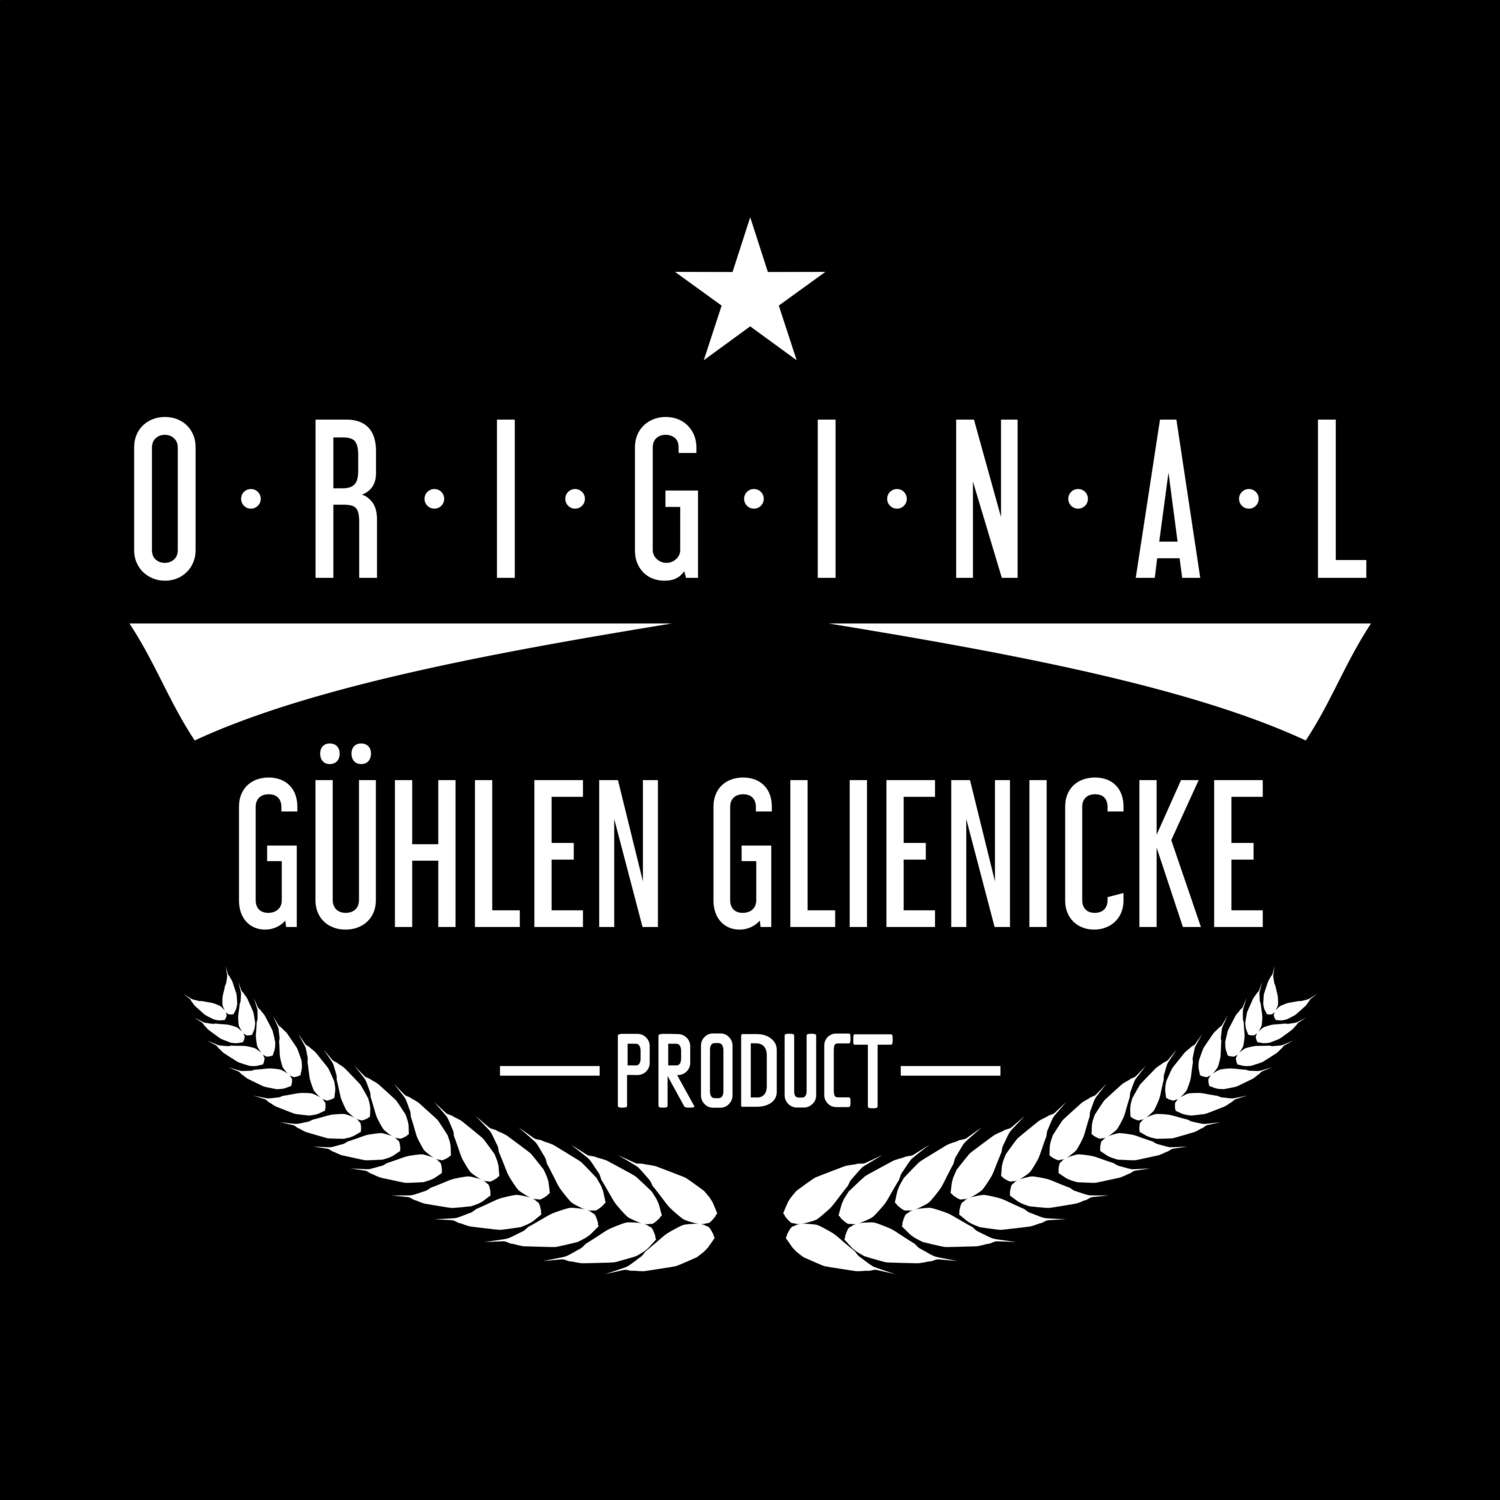 Gühlen Glienicke T-Shirt »Original Product«